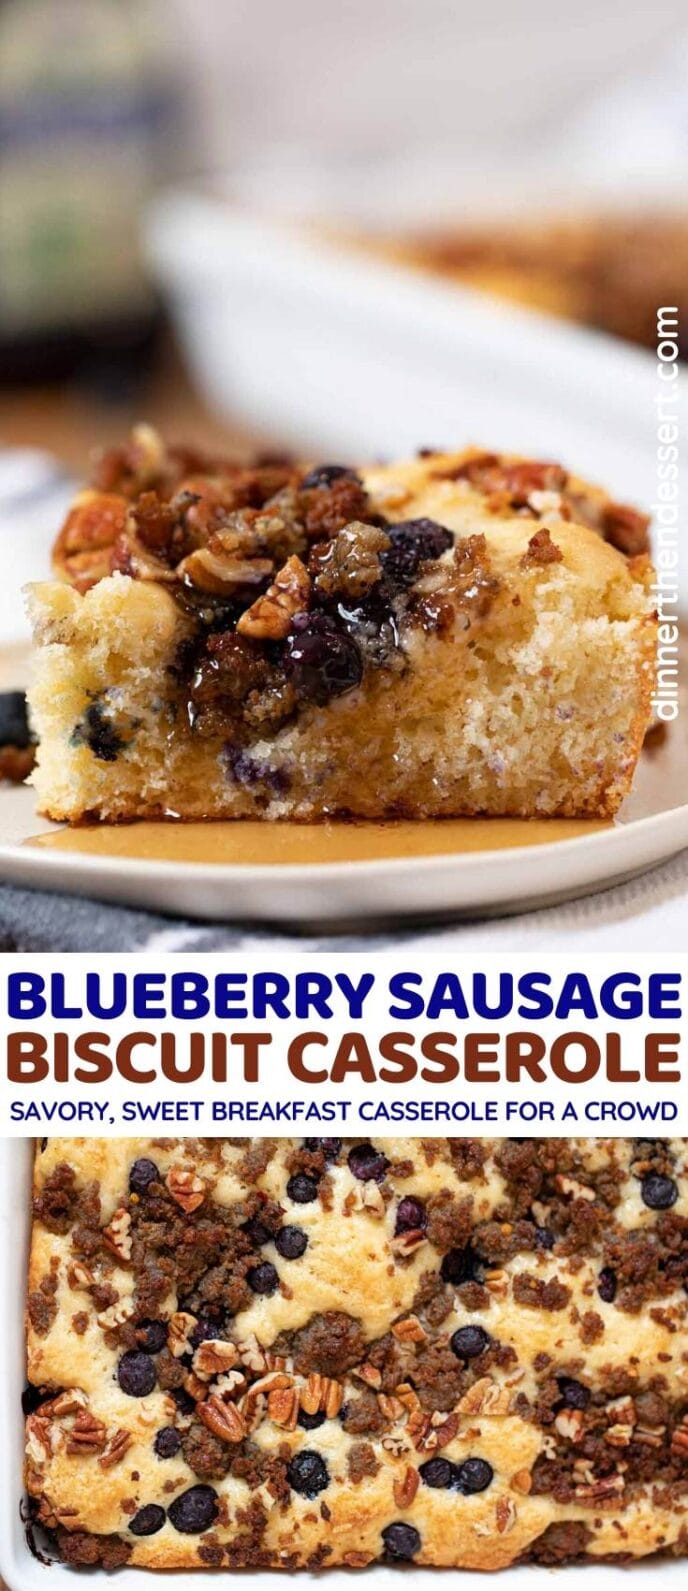 Blueberry Sausage Biscuit Casserole collage